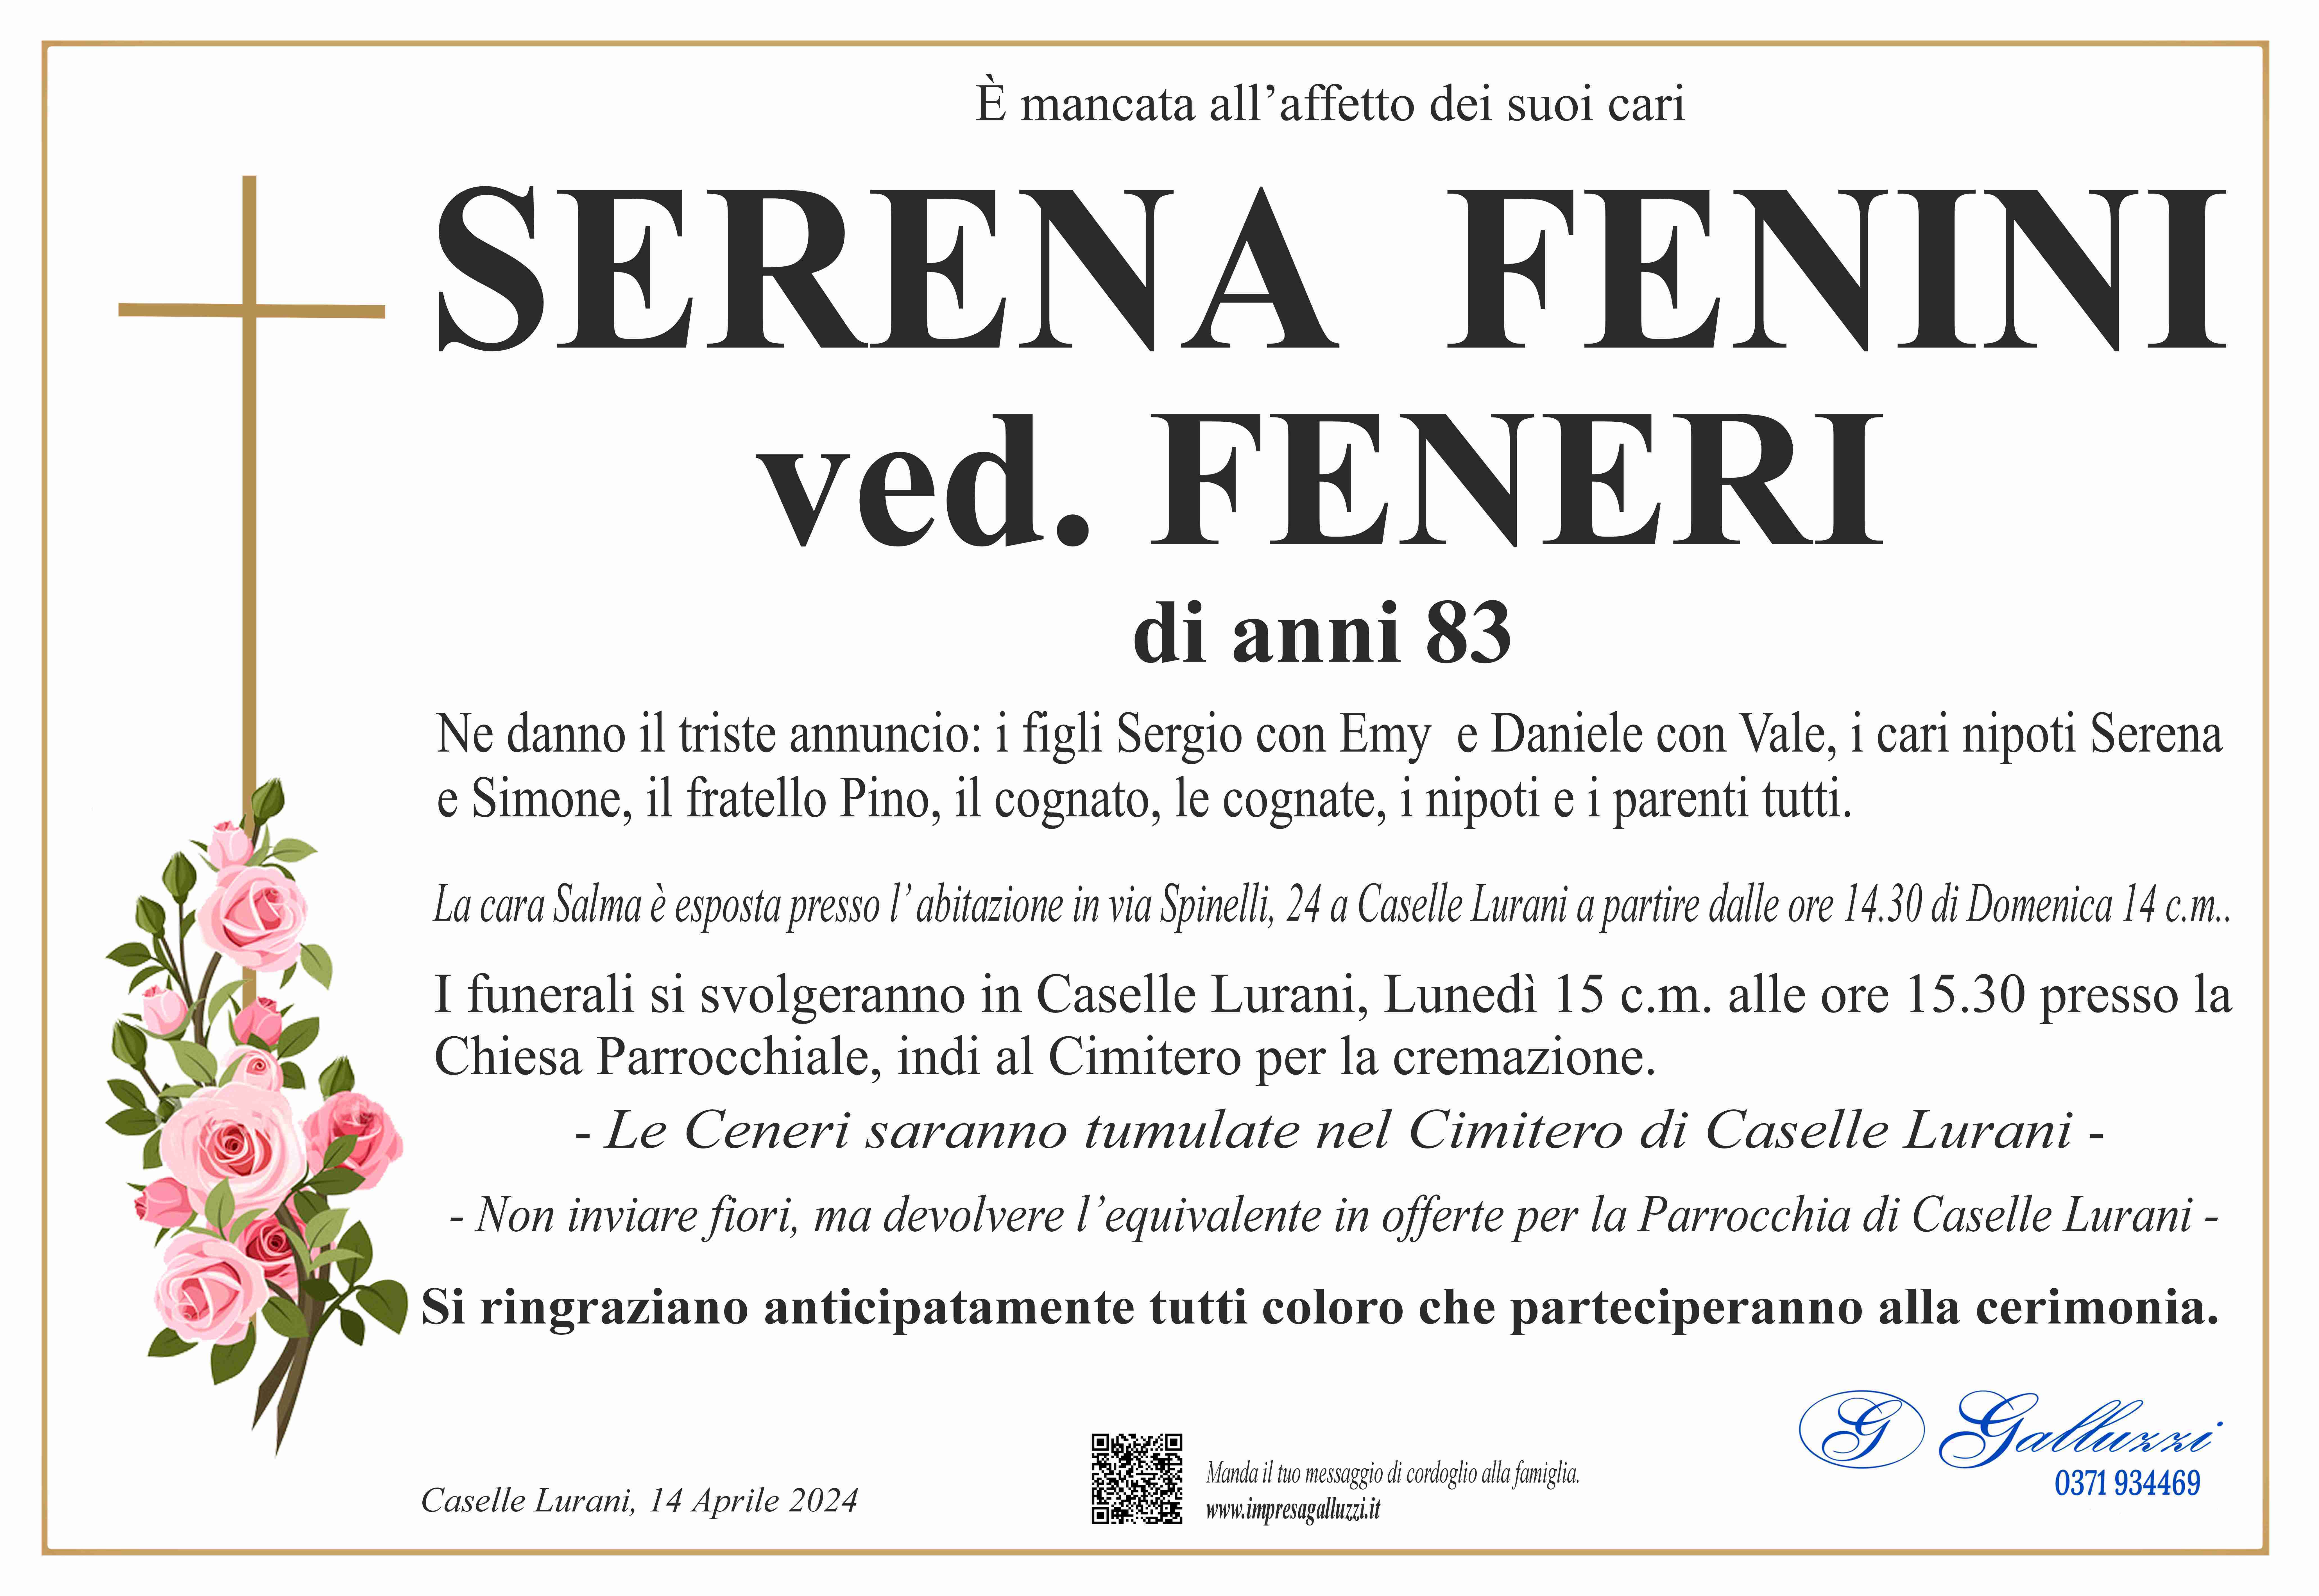 Serena Fenini